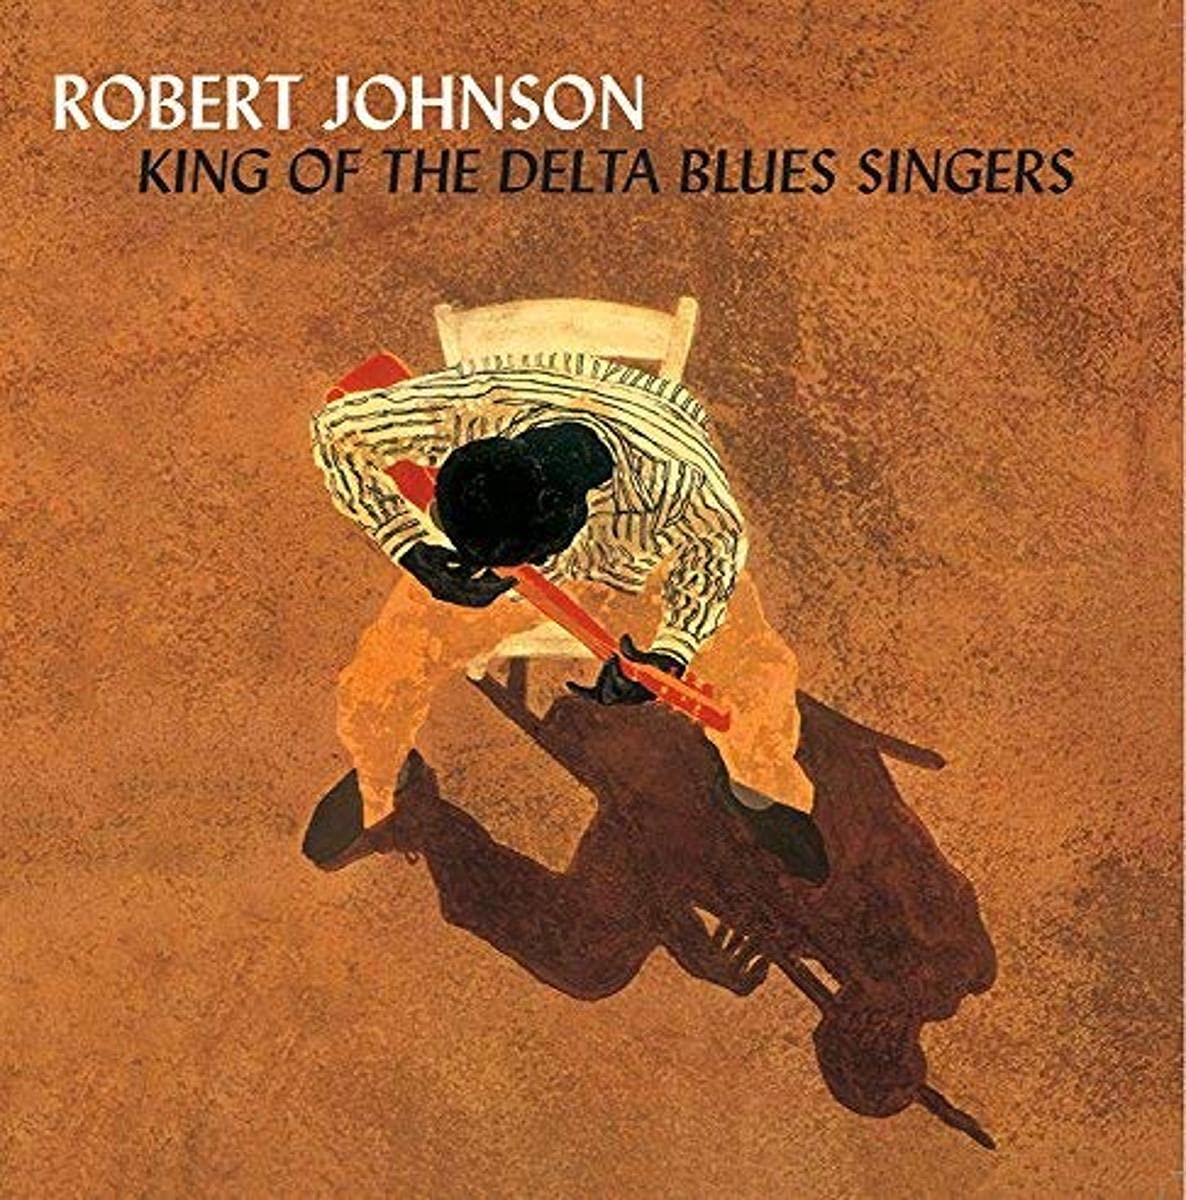 Robert Johnson - King of the Delta Blues Singers (1961)